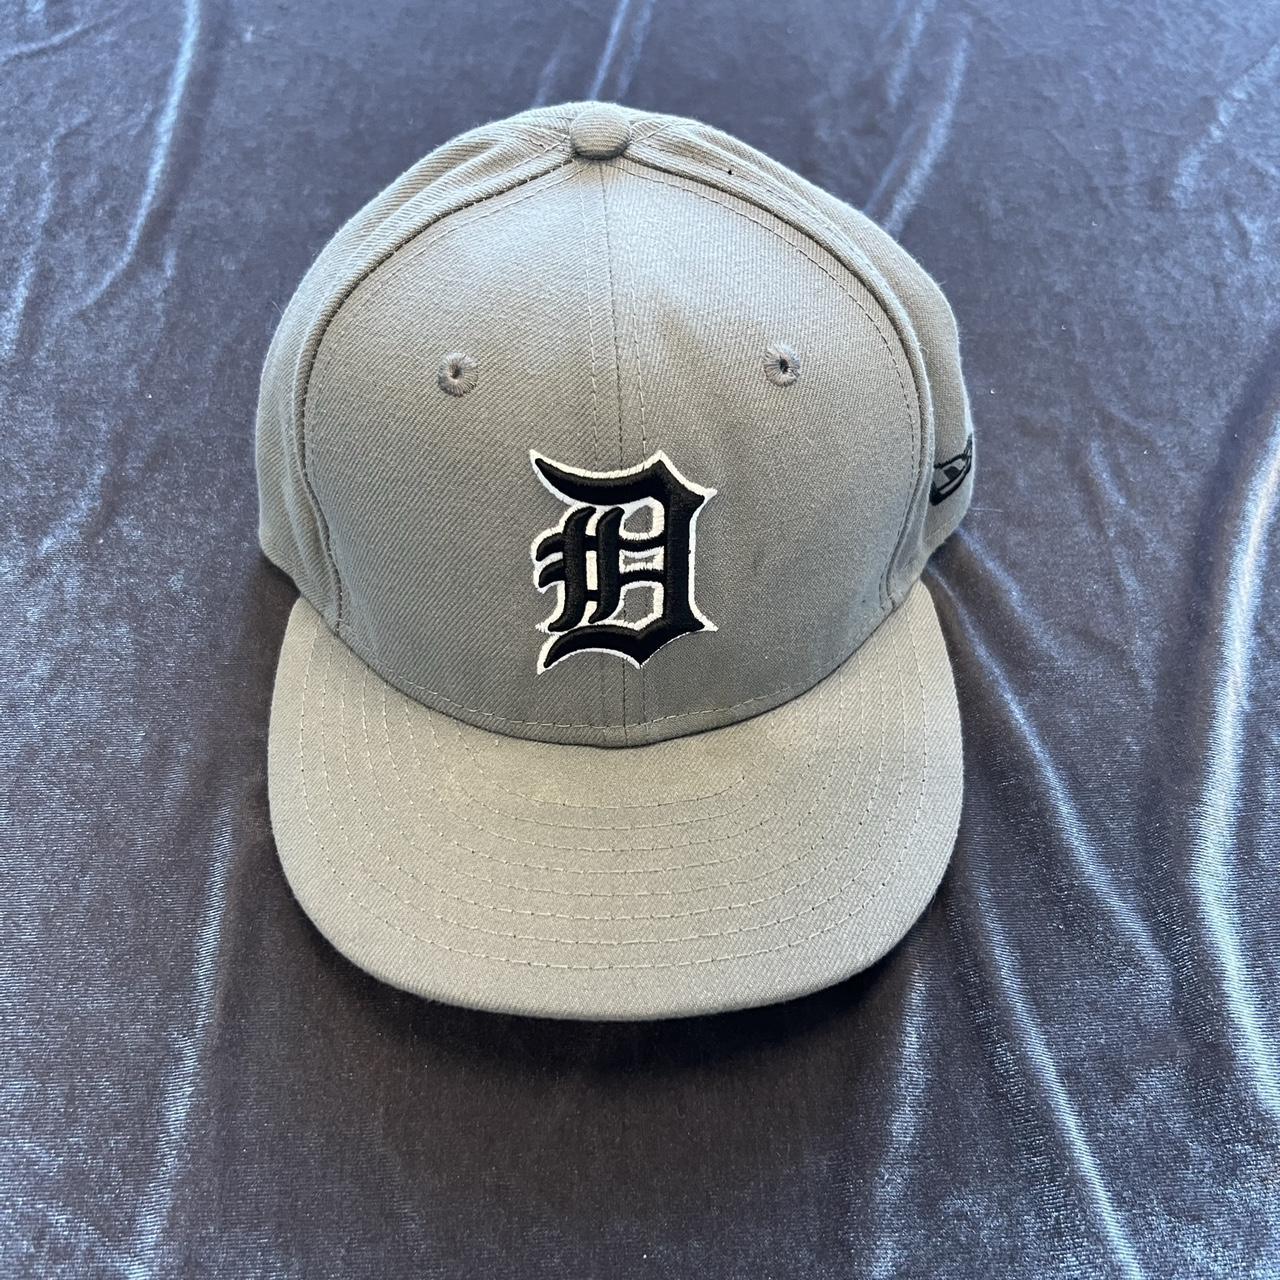 New Era Detroit Tigers corduroy snapback baseball - Depop